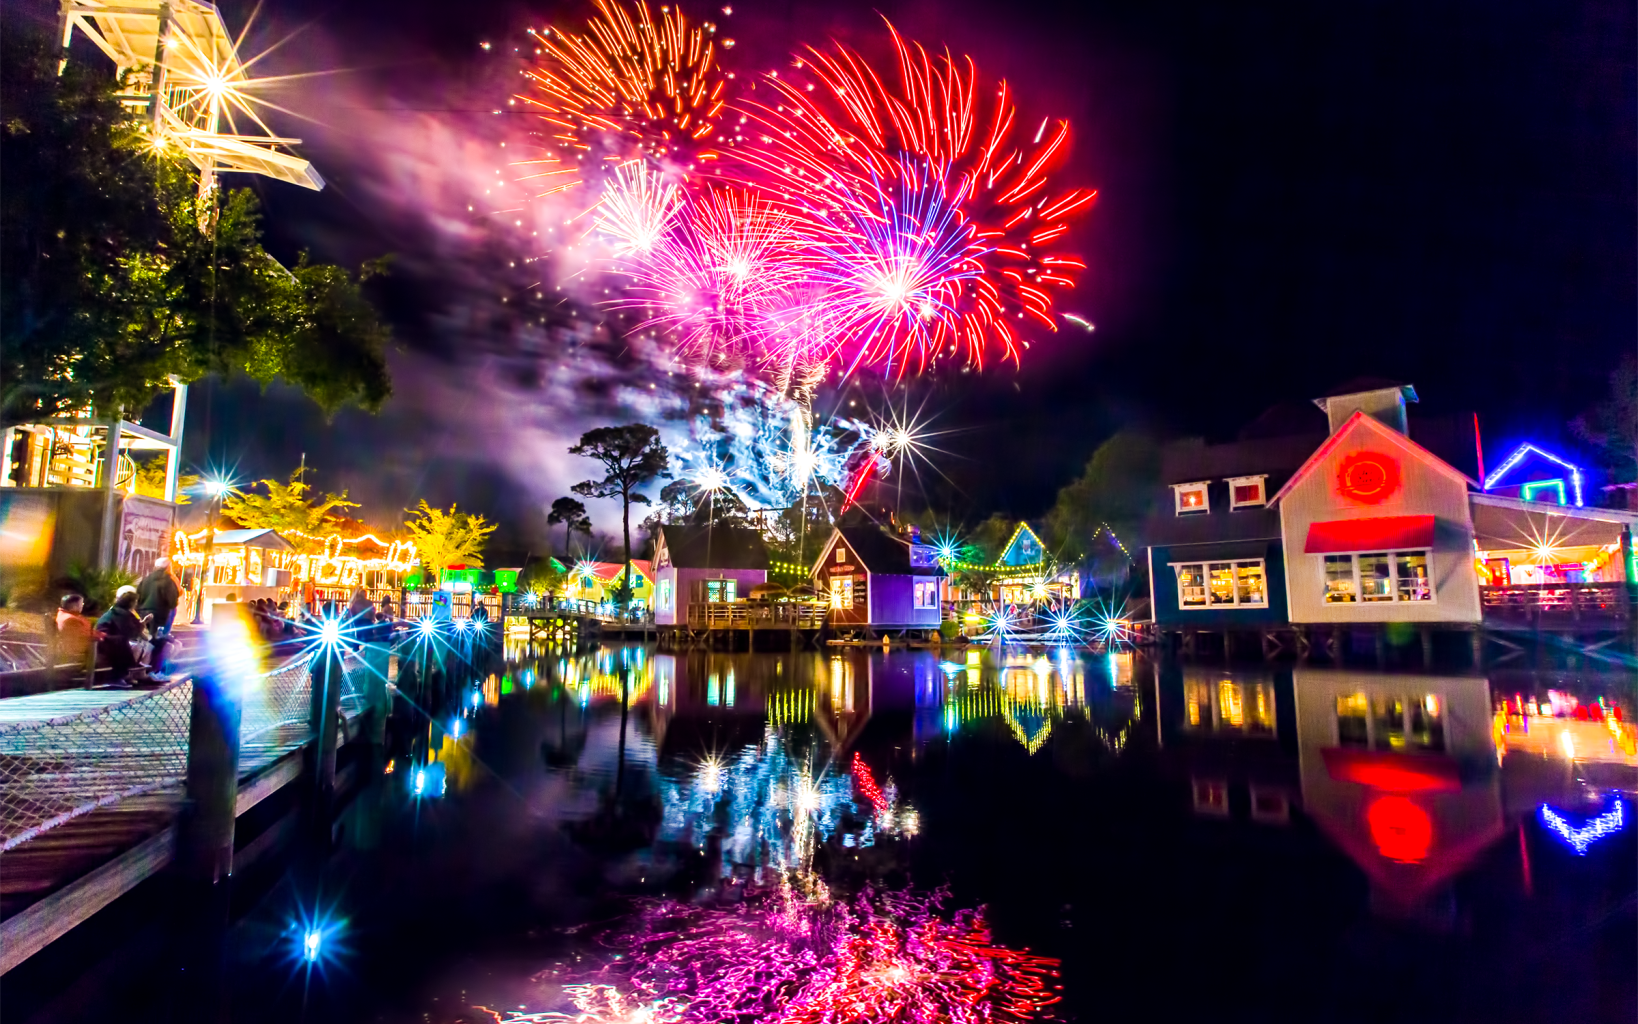 fireworks over lagoon